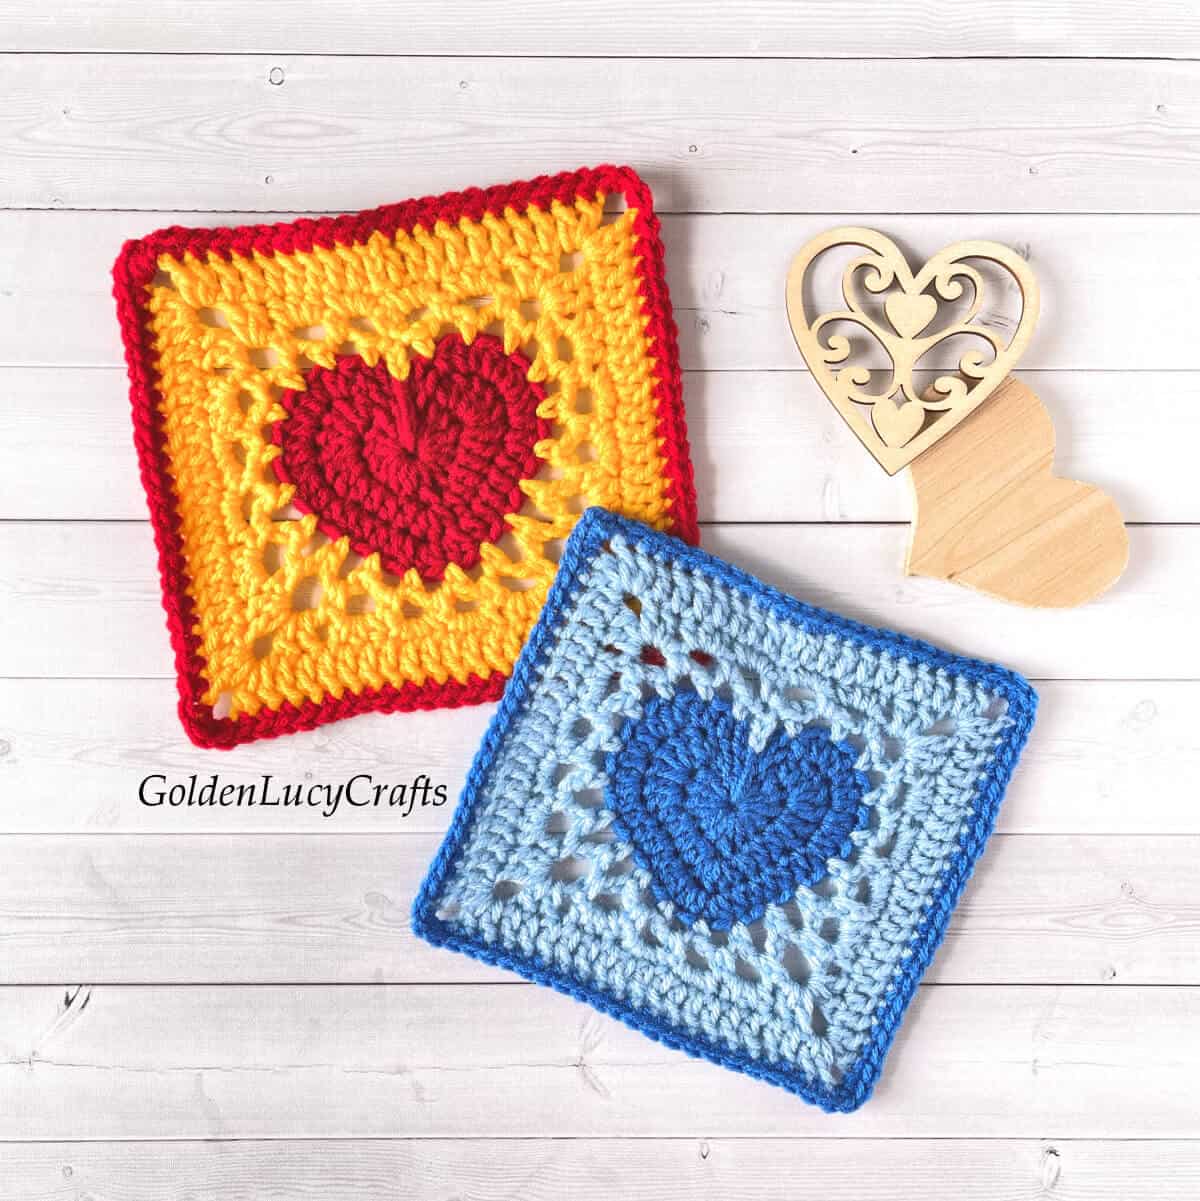 40+ Free Crochet Square Patterns for Beginners - Easy Crochet Patterns